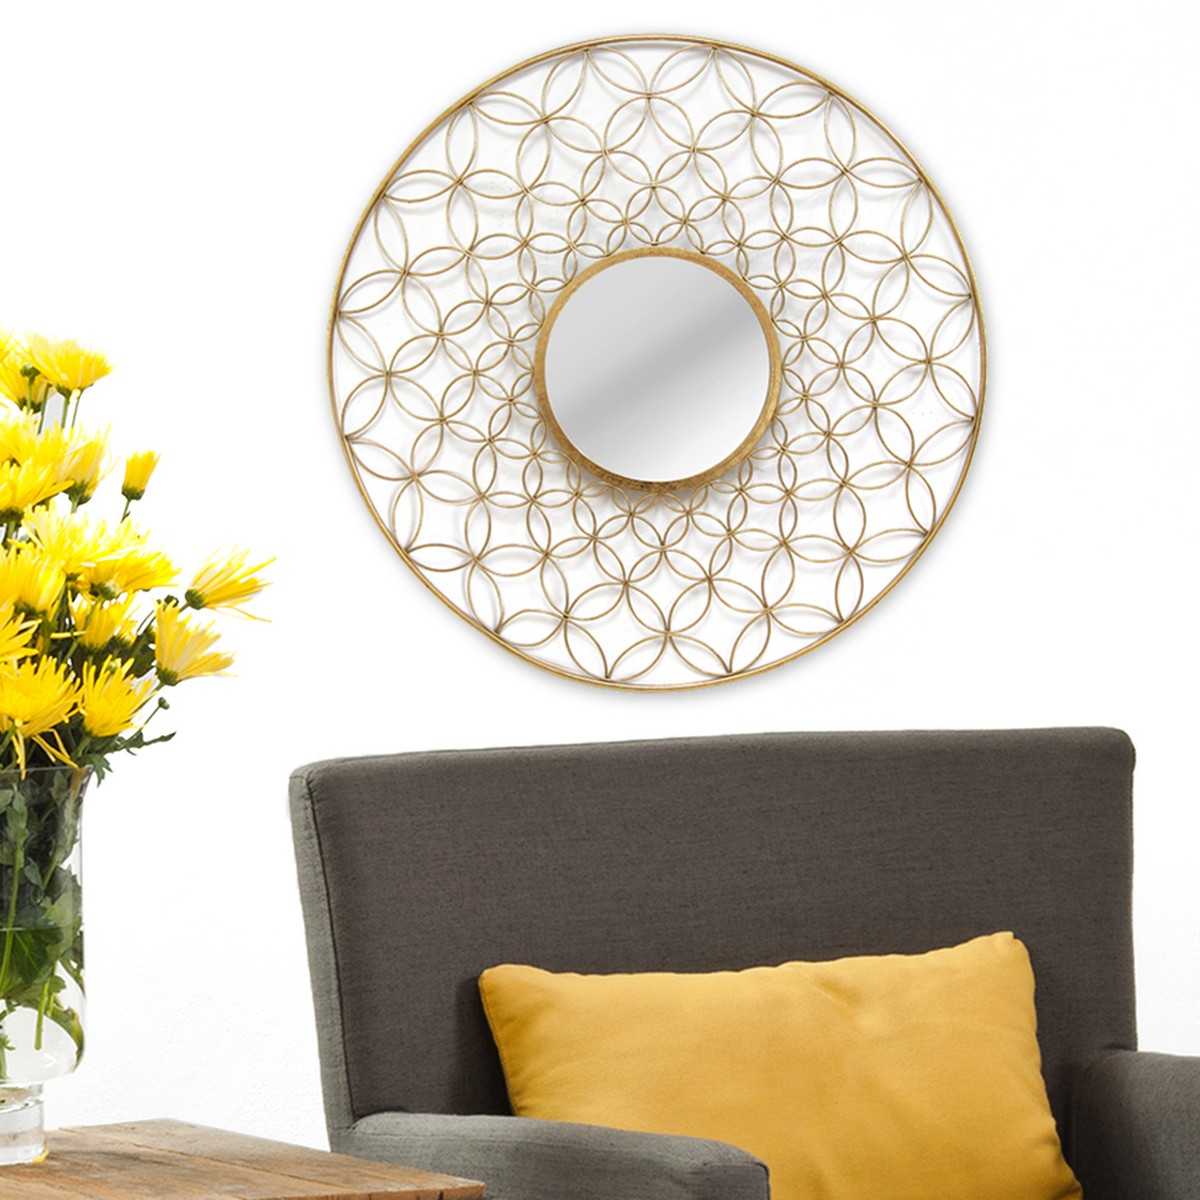 Stratton Home Decor Elyse Wall Mirror - Gold